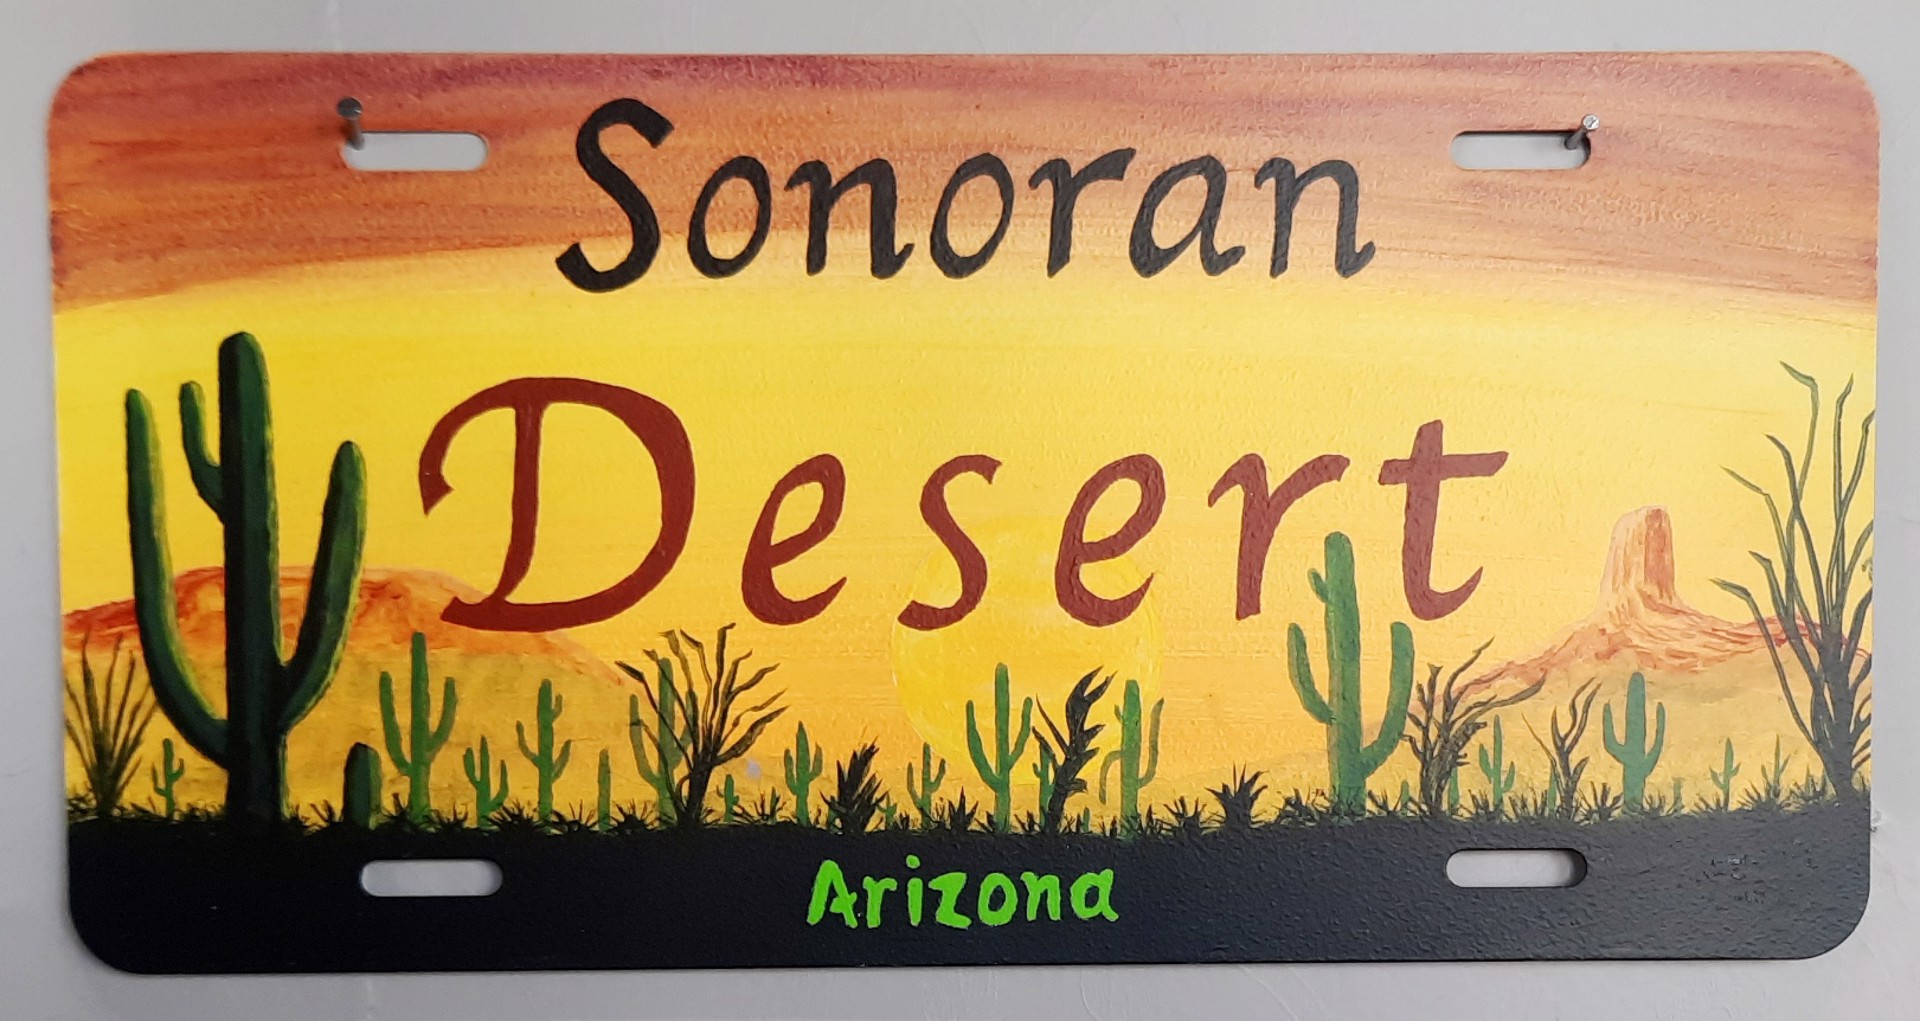 Sonoran Desert License Plate, 5021 by John Wulf